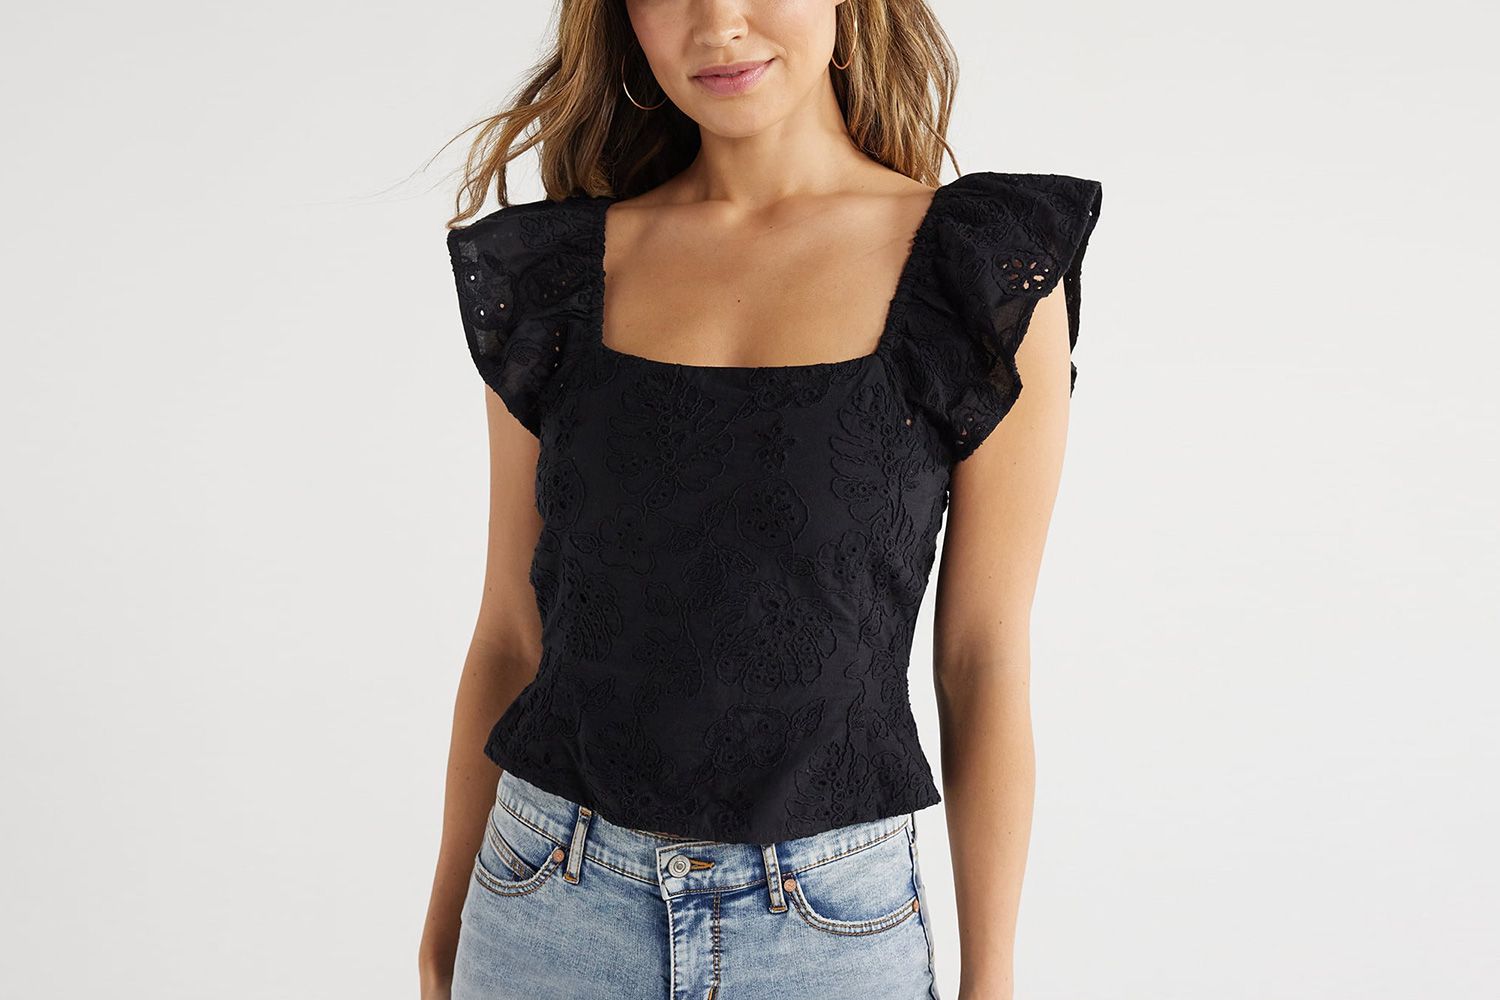 Walmart Sofia Jeans Women's Ruffle Sleeve Top